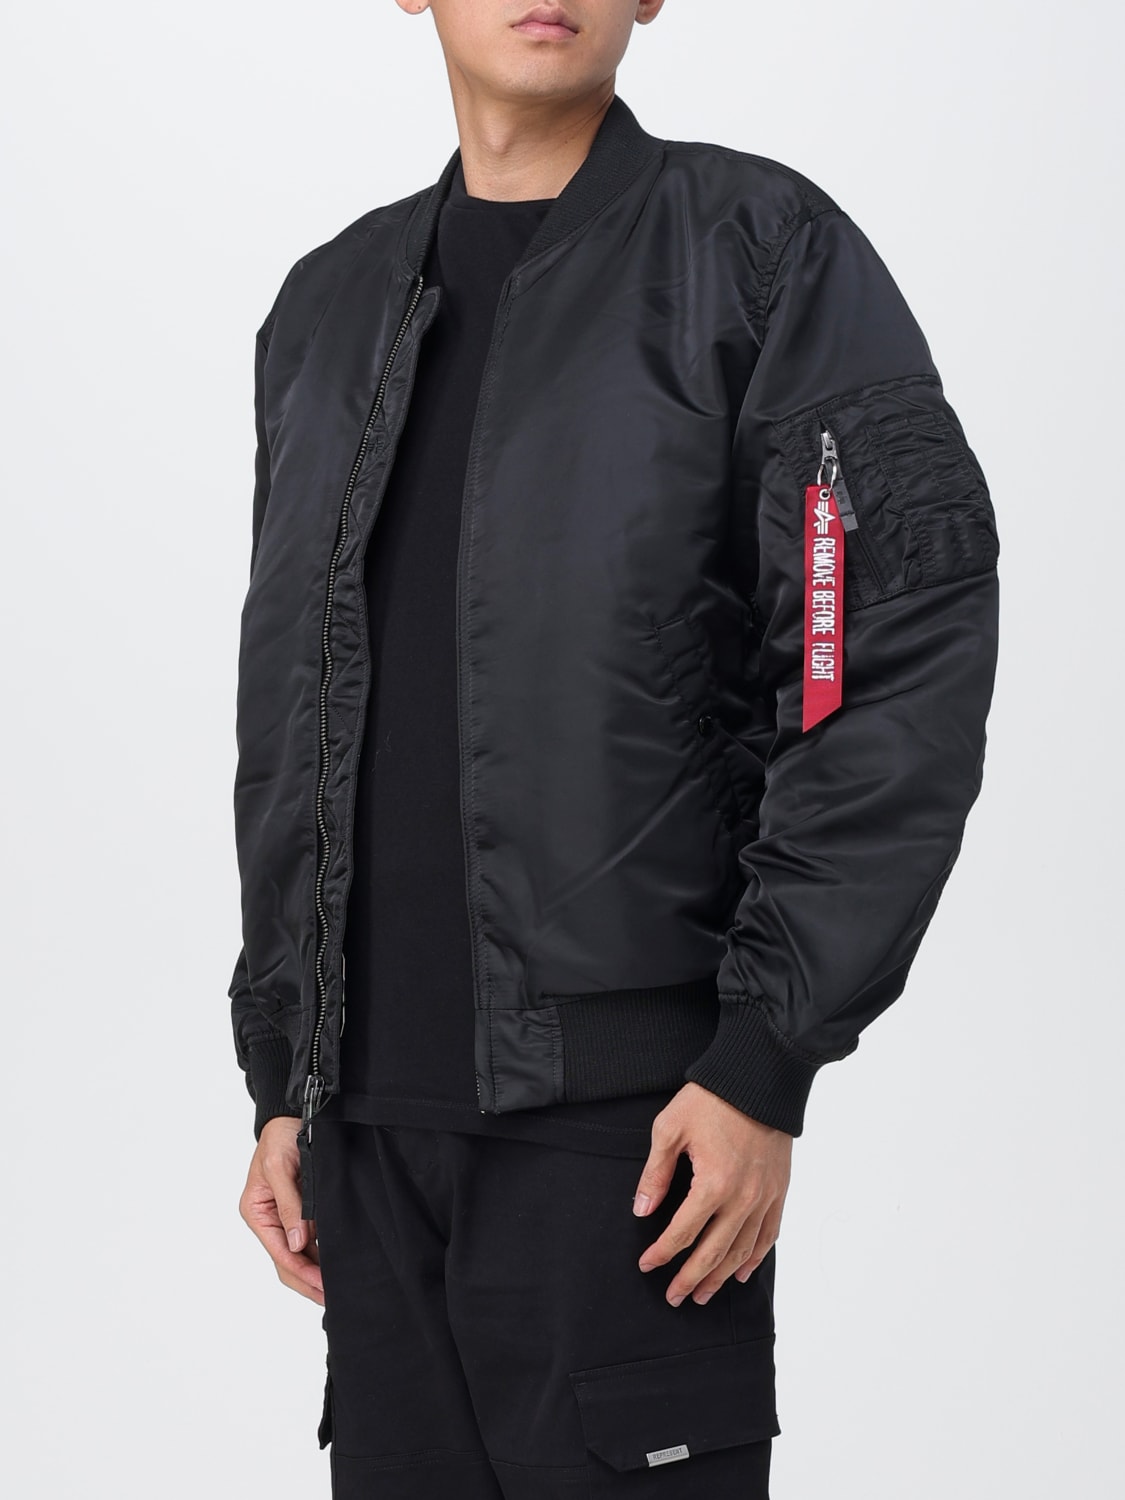 | man 138103 ALPHA jacket for Black - INDUSTRIES: jacket Alpha Industries at online